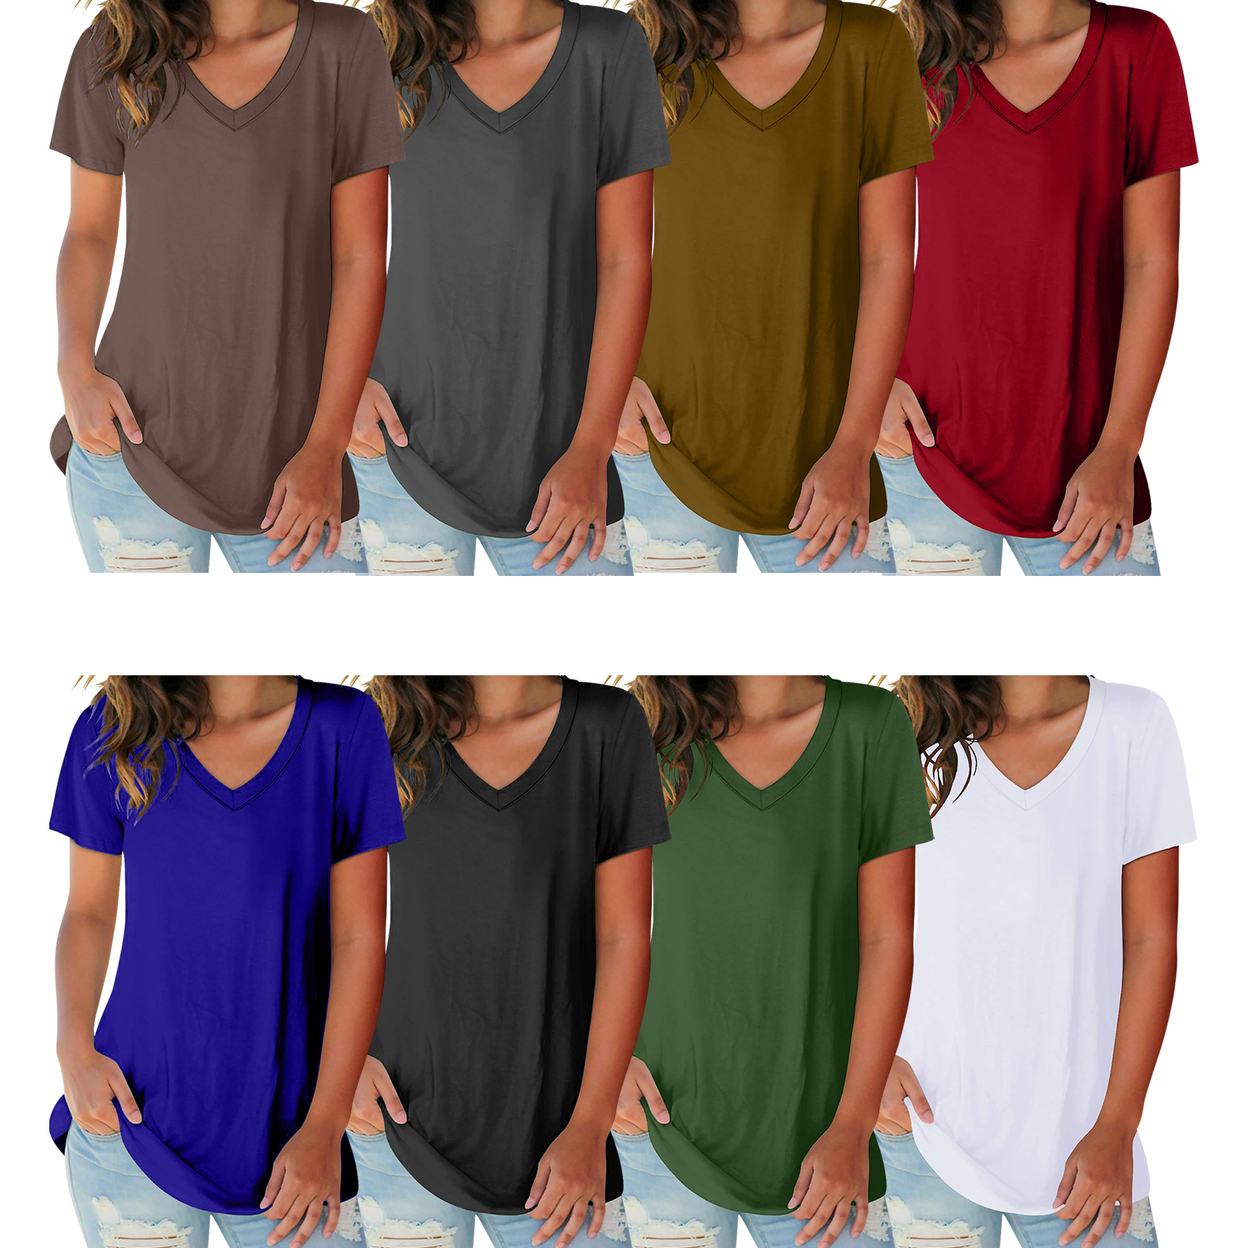 2-Pack: Women's Ultra Soft Smooth Cotton Blend Basic V-Neck Short Sleeve Shirts - White & Mustard, Small